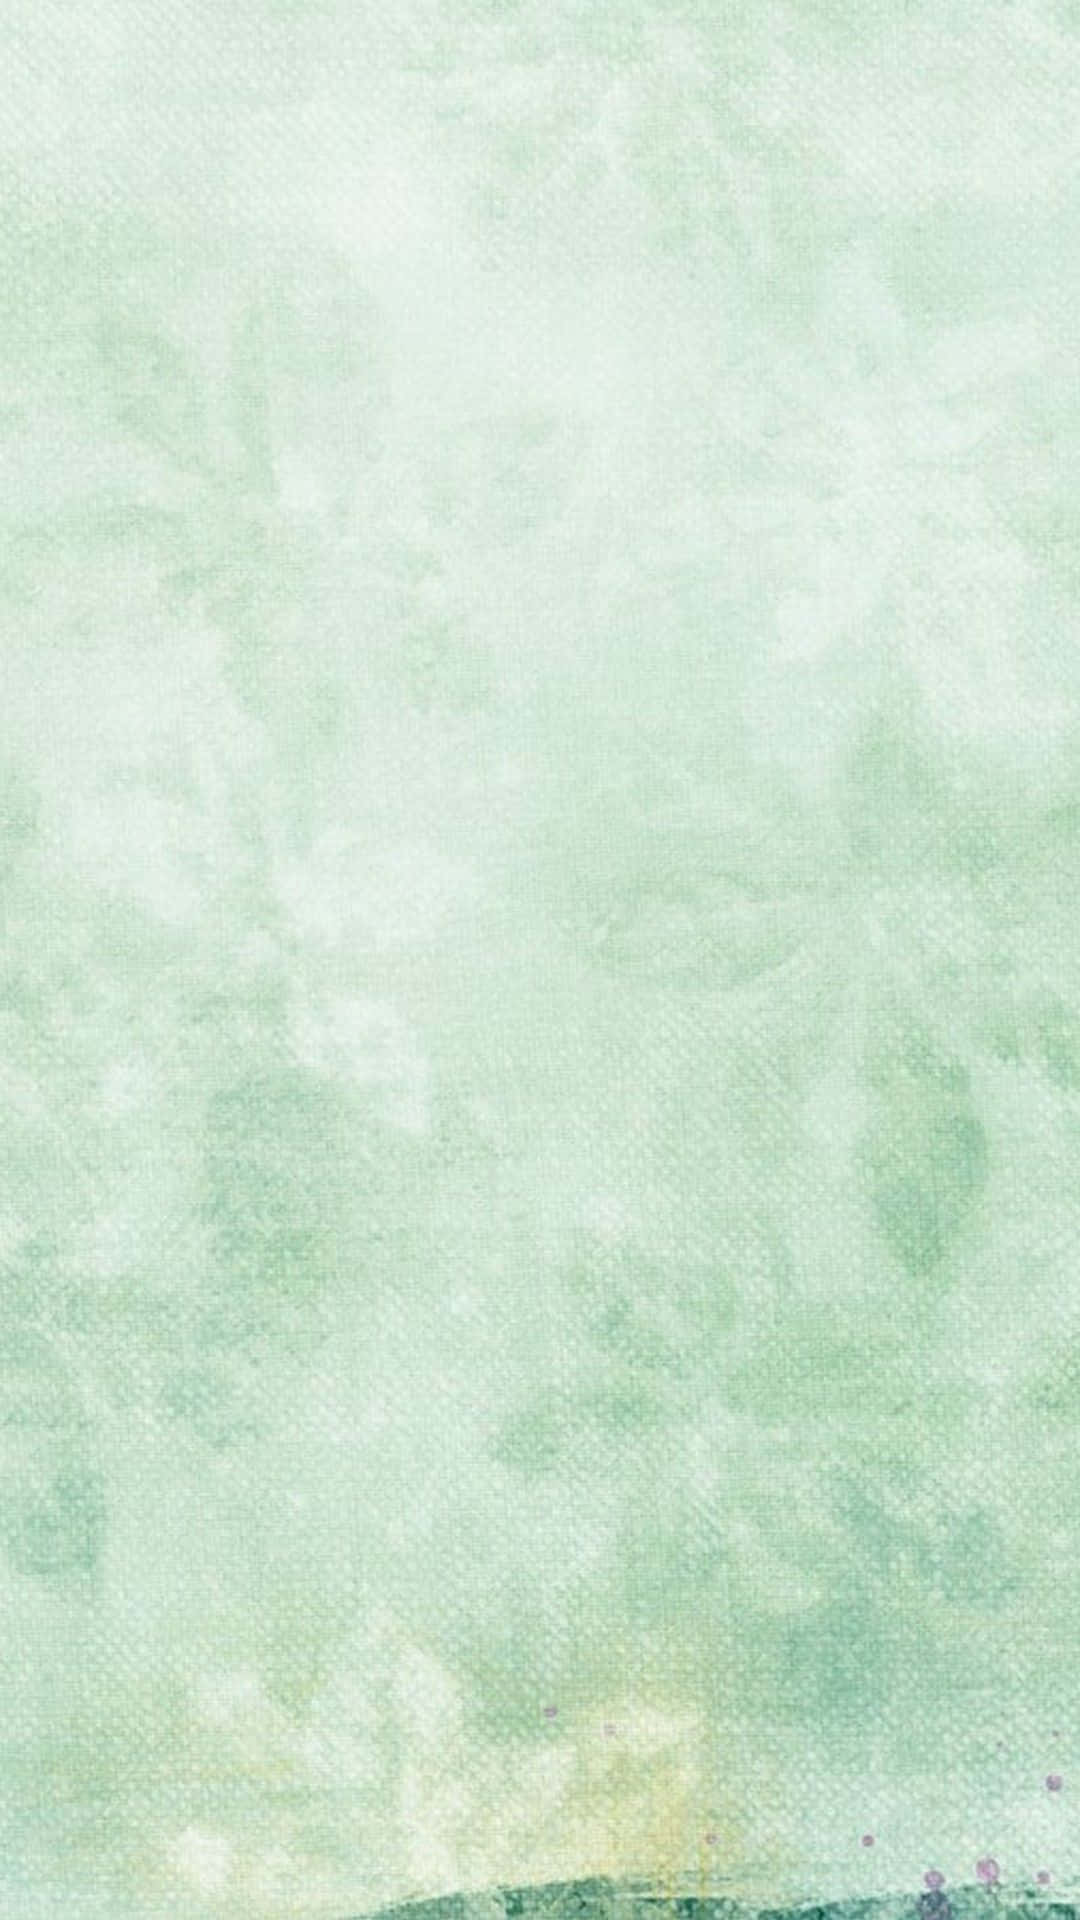 Mint green aesthetic  Mint green wallpaper iphone Mint green wallpaper  Mint green aesthetic